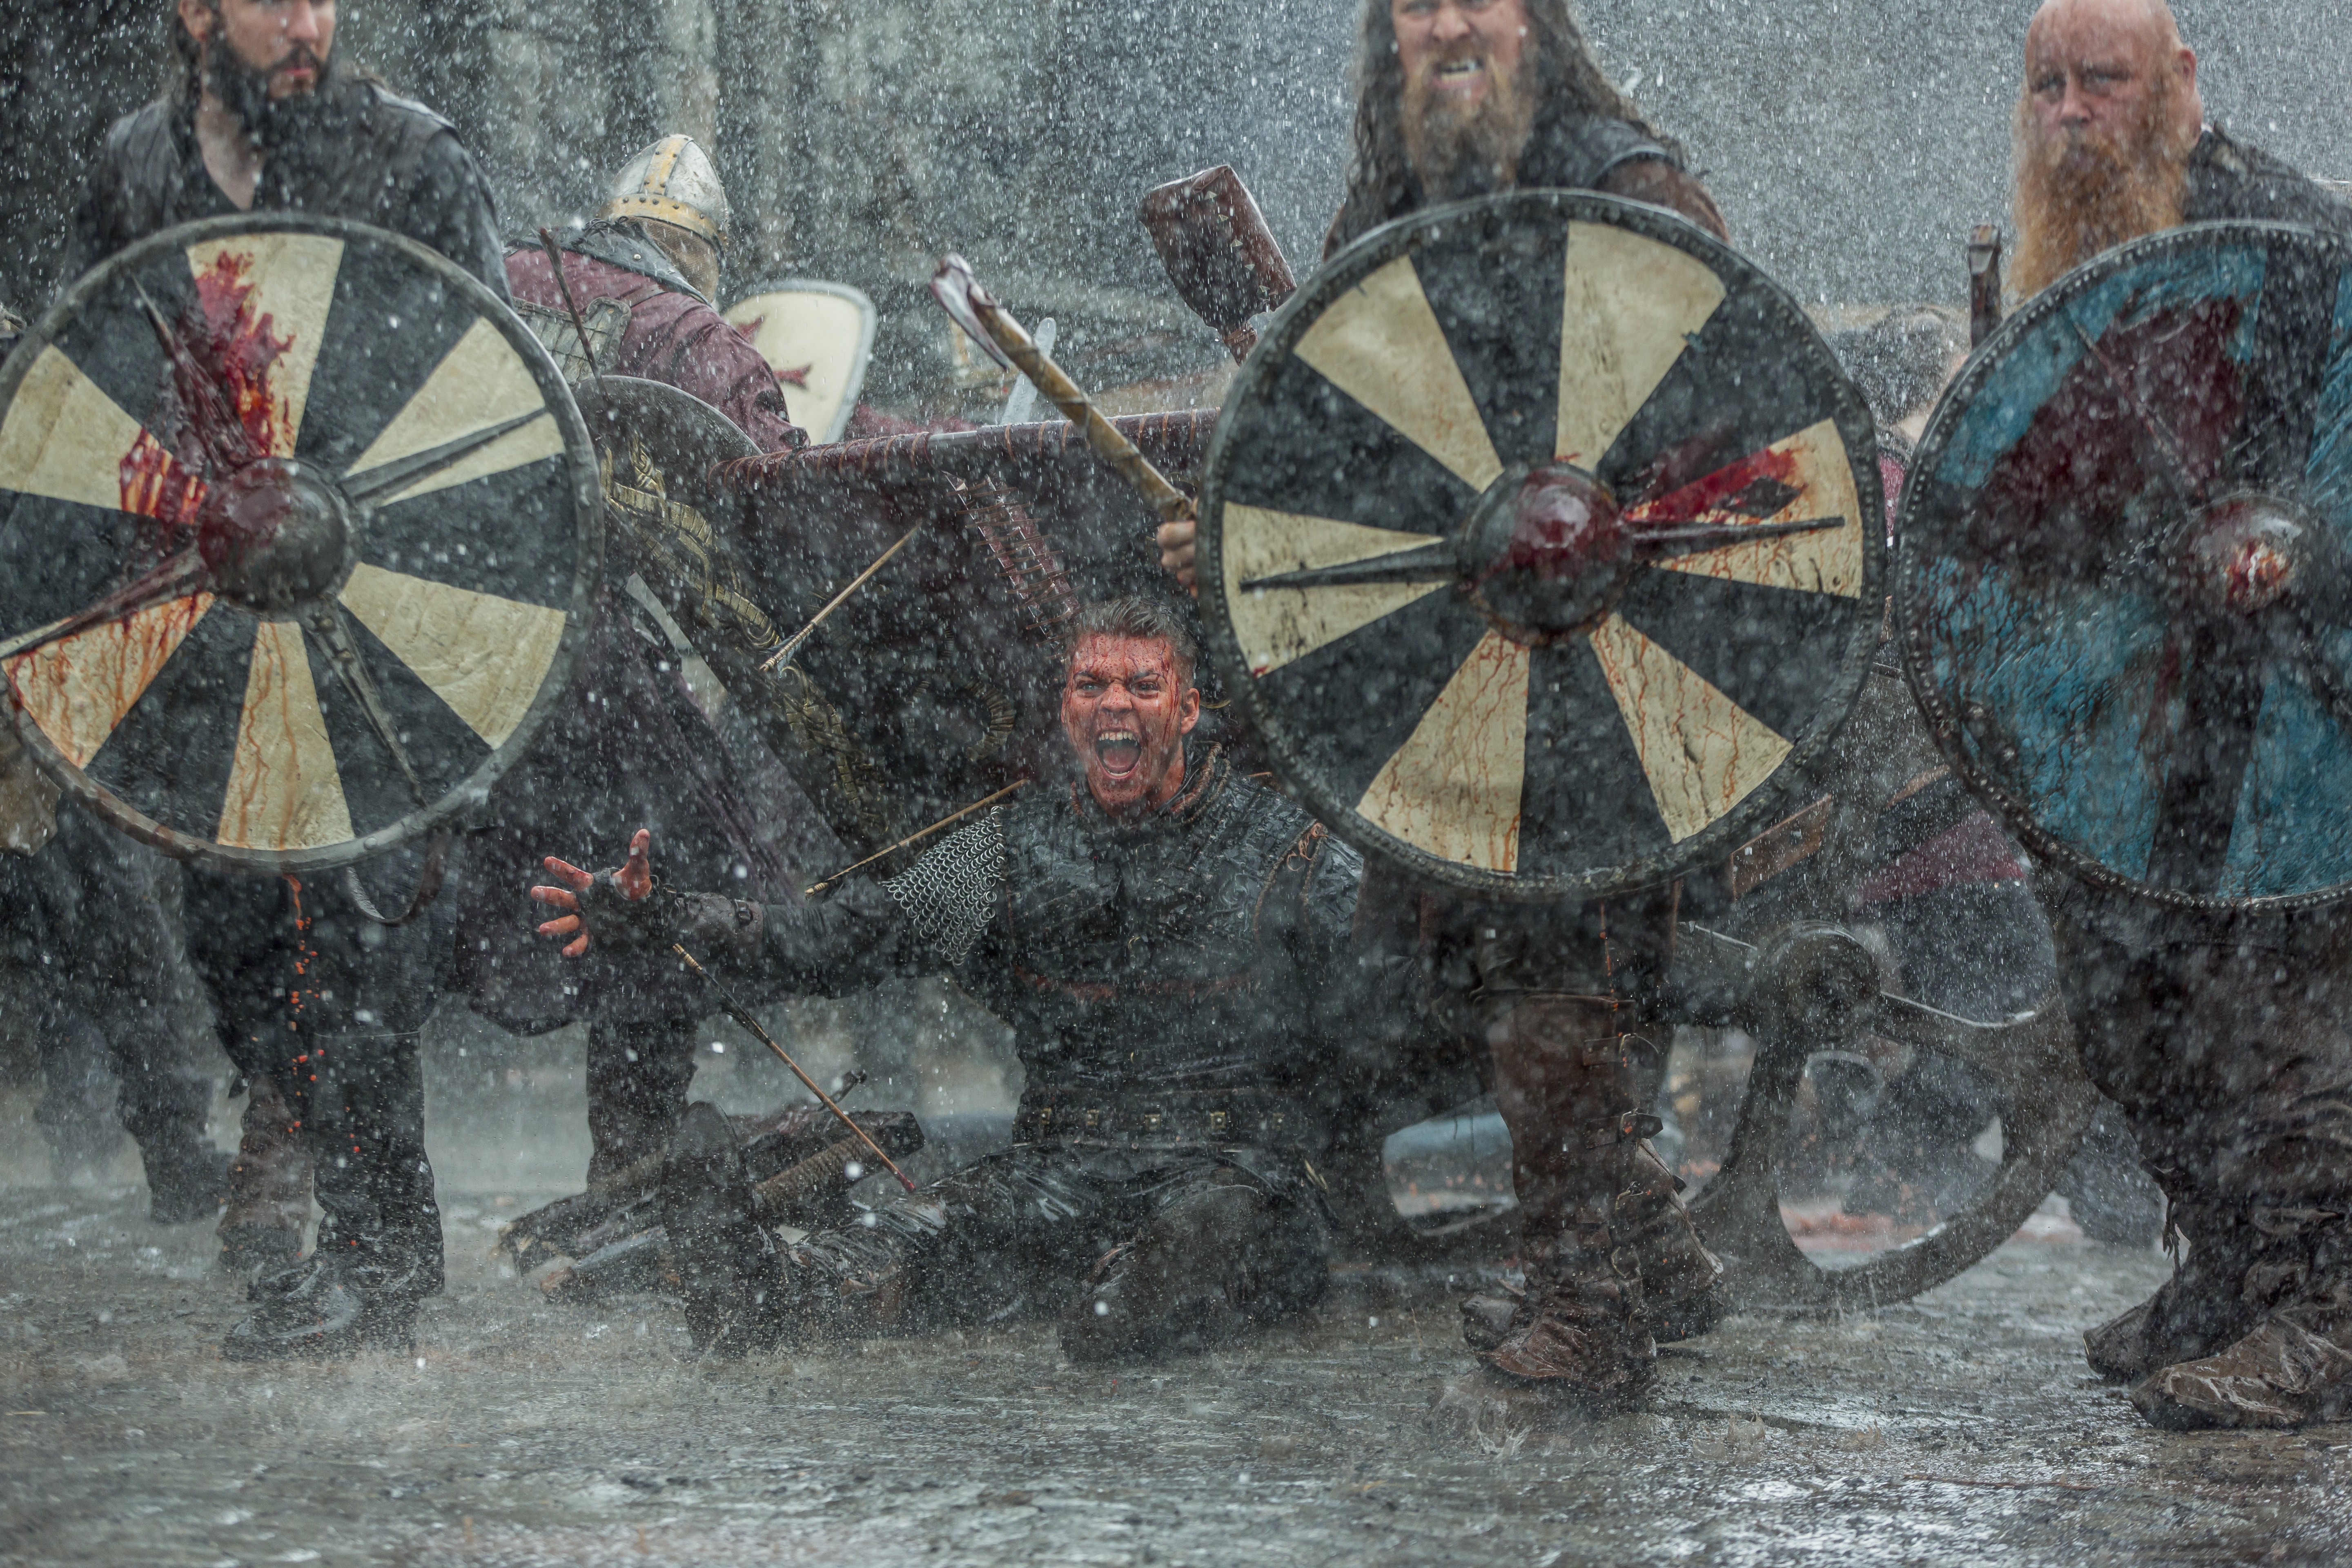 Vikings Tv Show Background